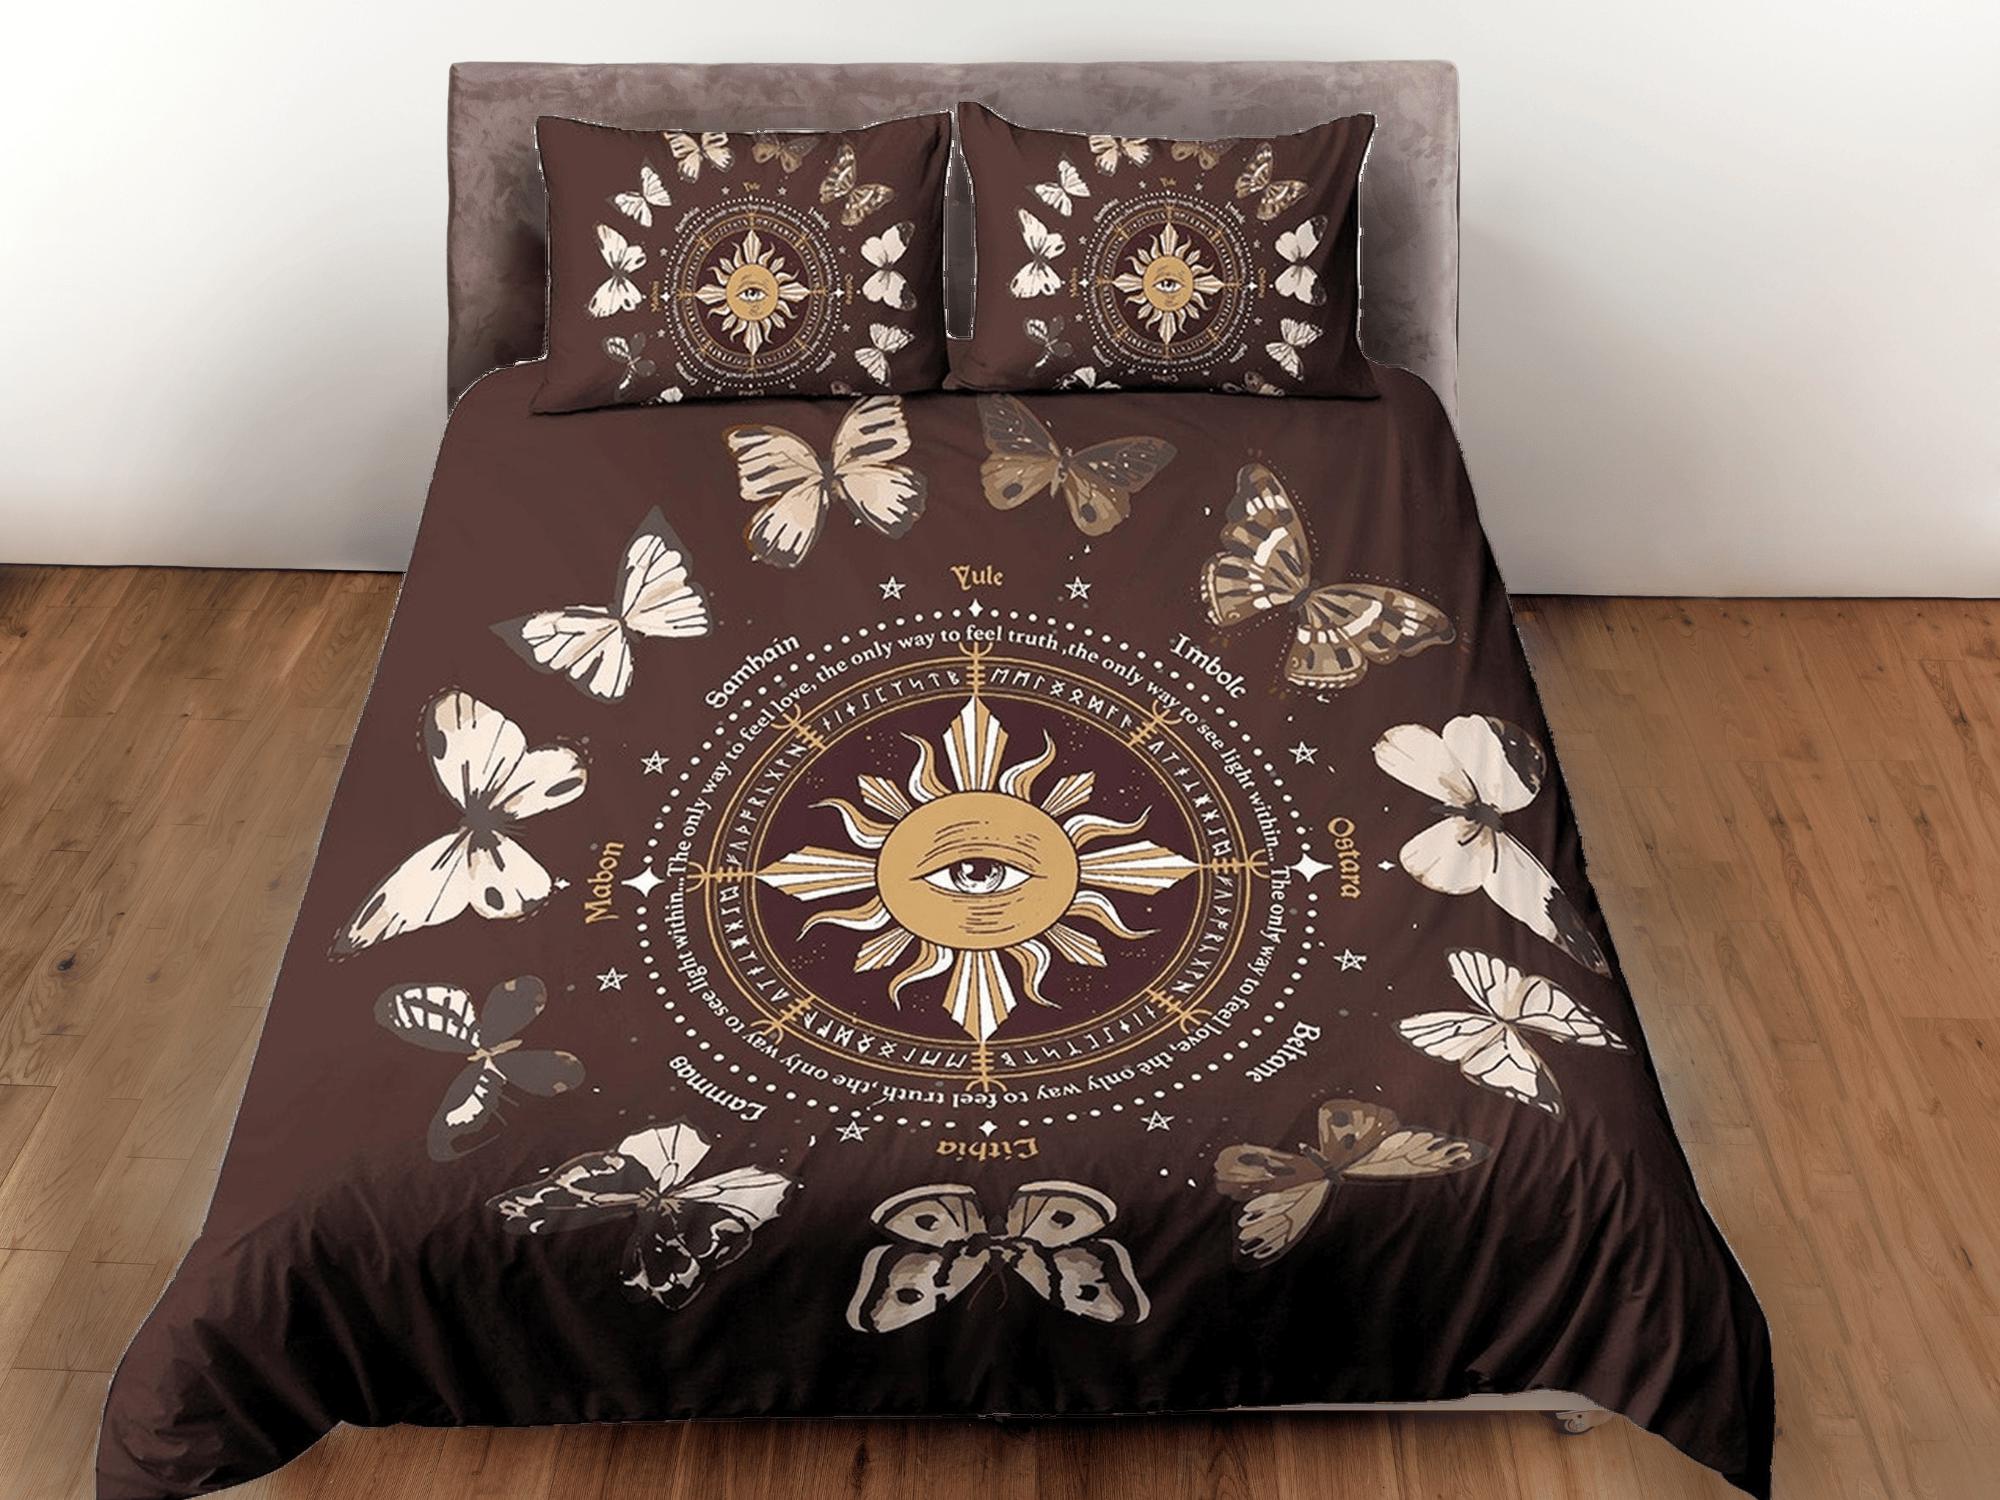 daintyduvet Celestial bedding brown, witchy decor dorm bedding, aesthetic duvet cover set, boho bedding set full king queen, astrology gifts, gothic art